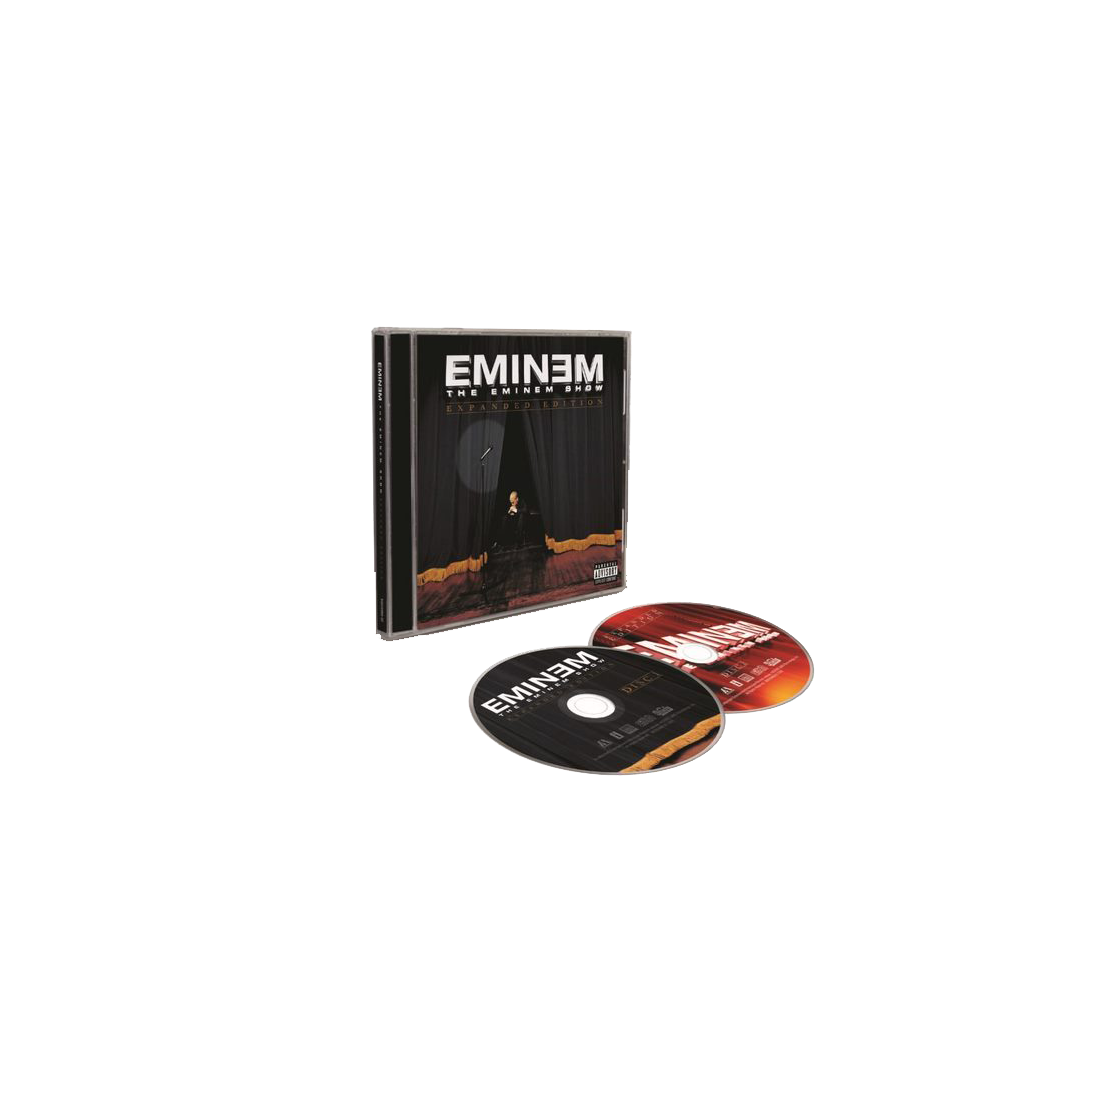 Eminem - The Eminem Show: Deluxe Edition 2CD